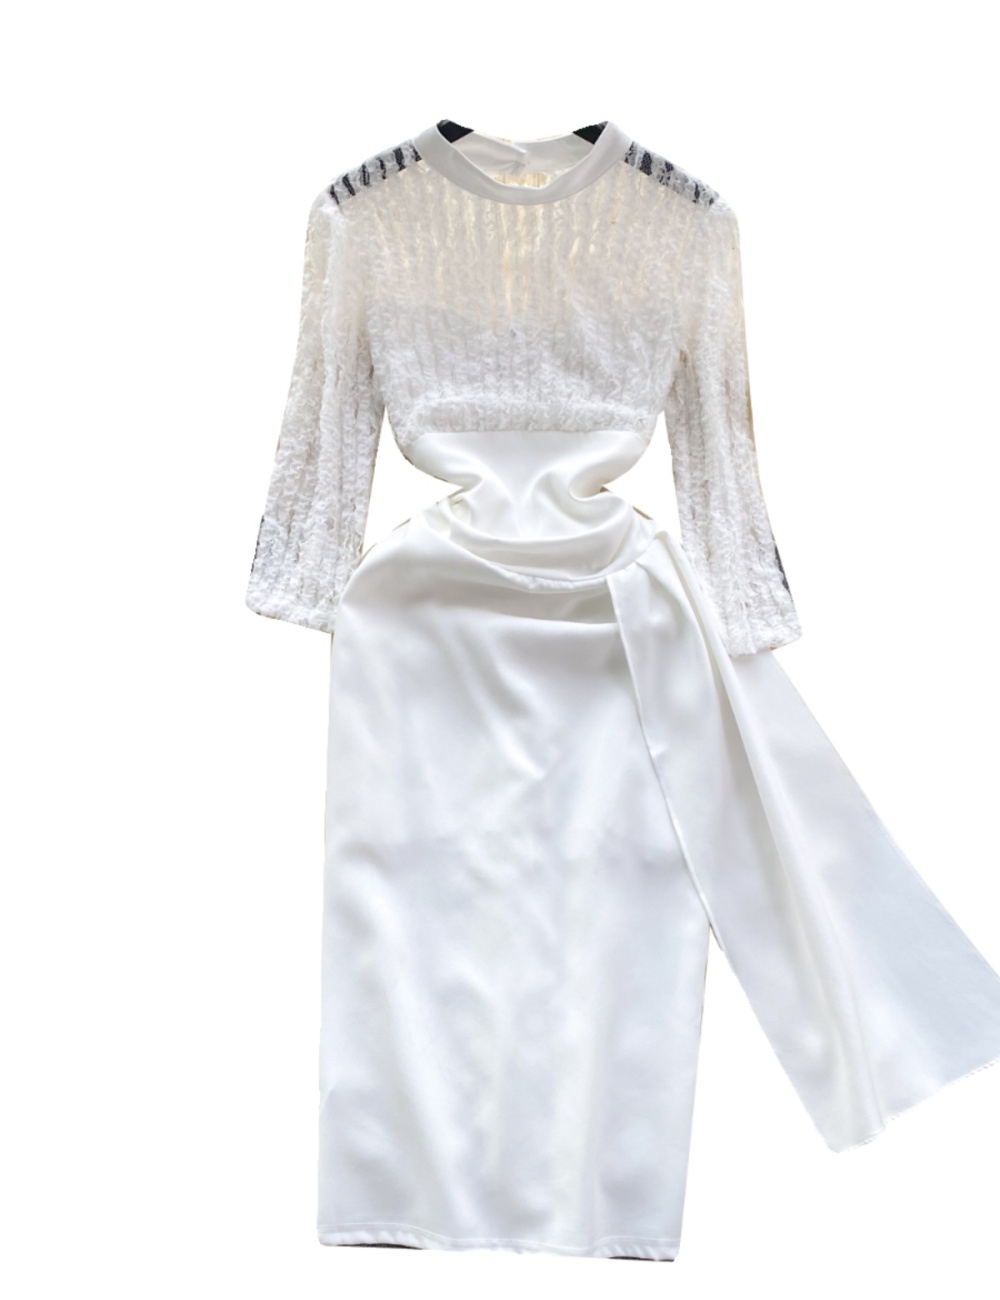 Spring short sleeve long splice lace dress for women